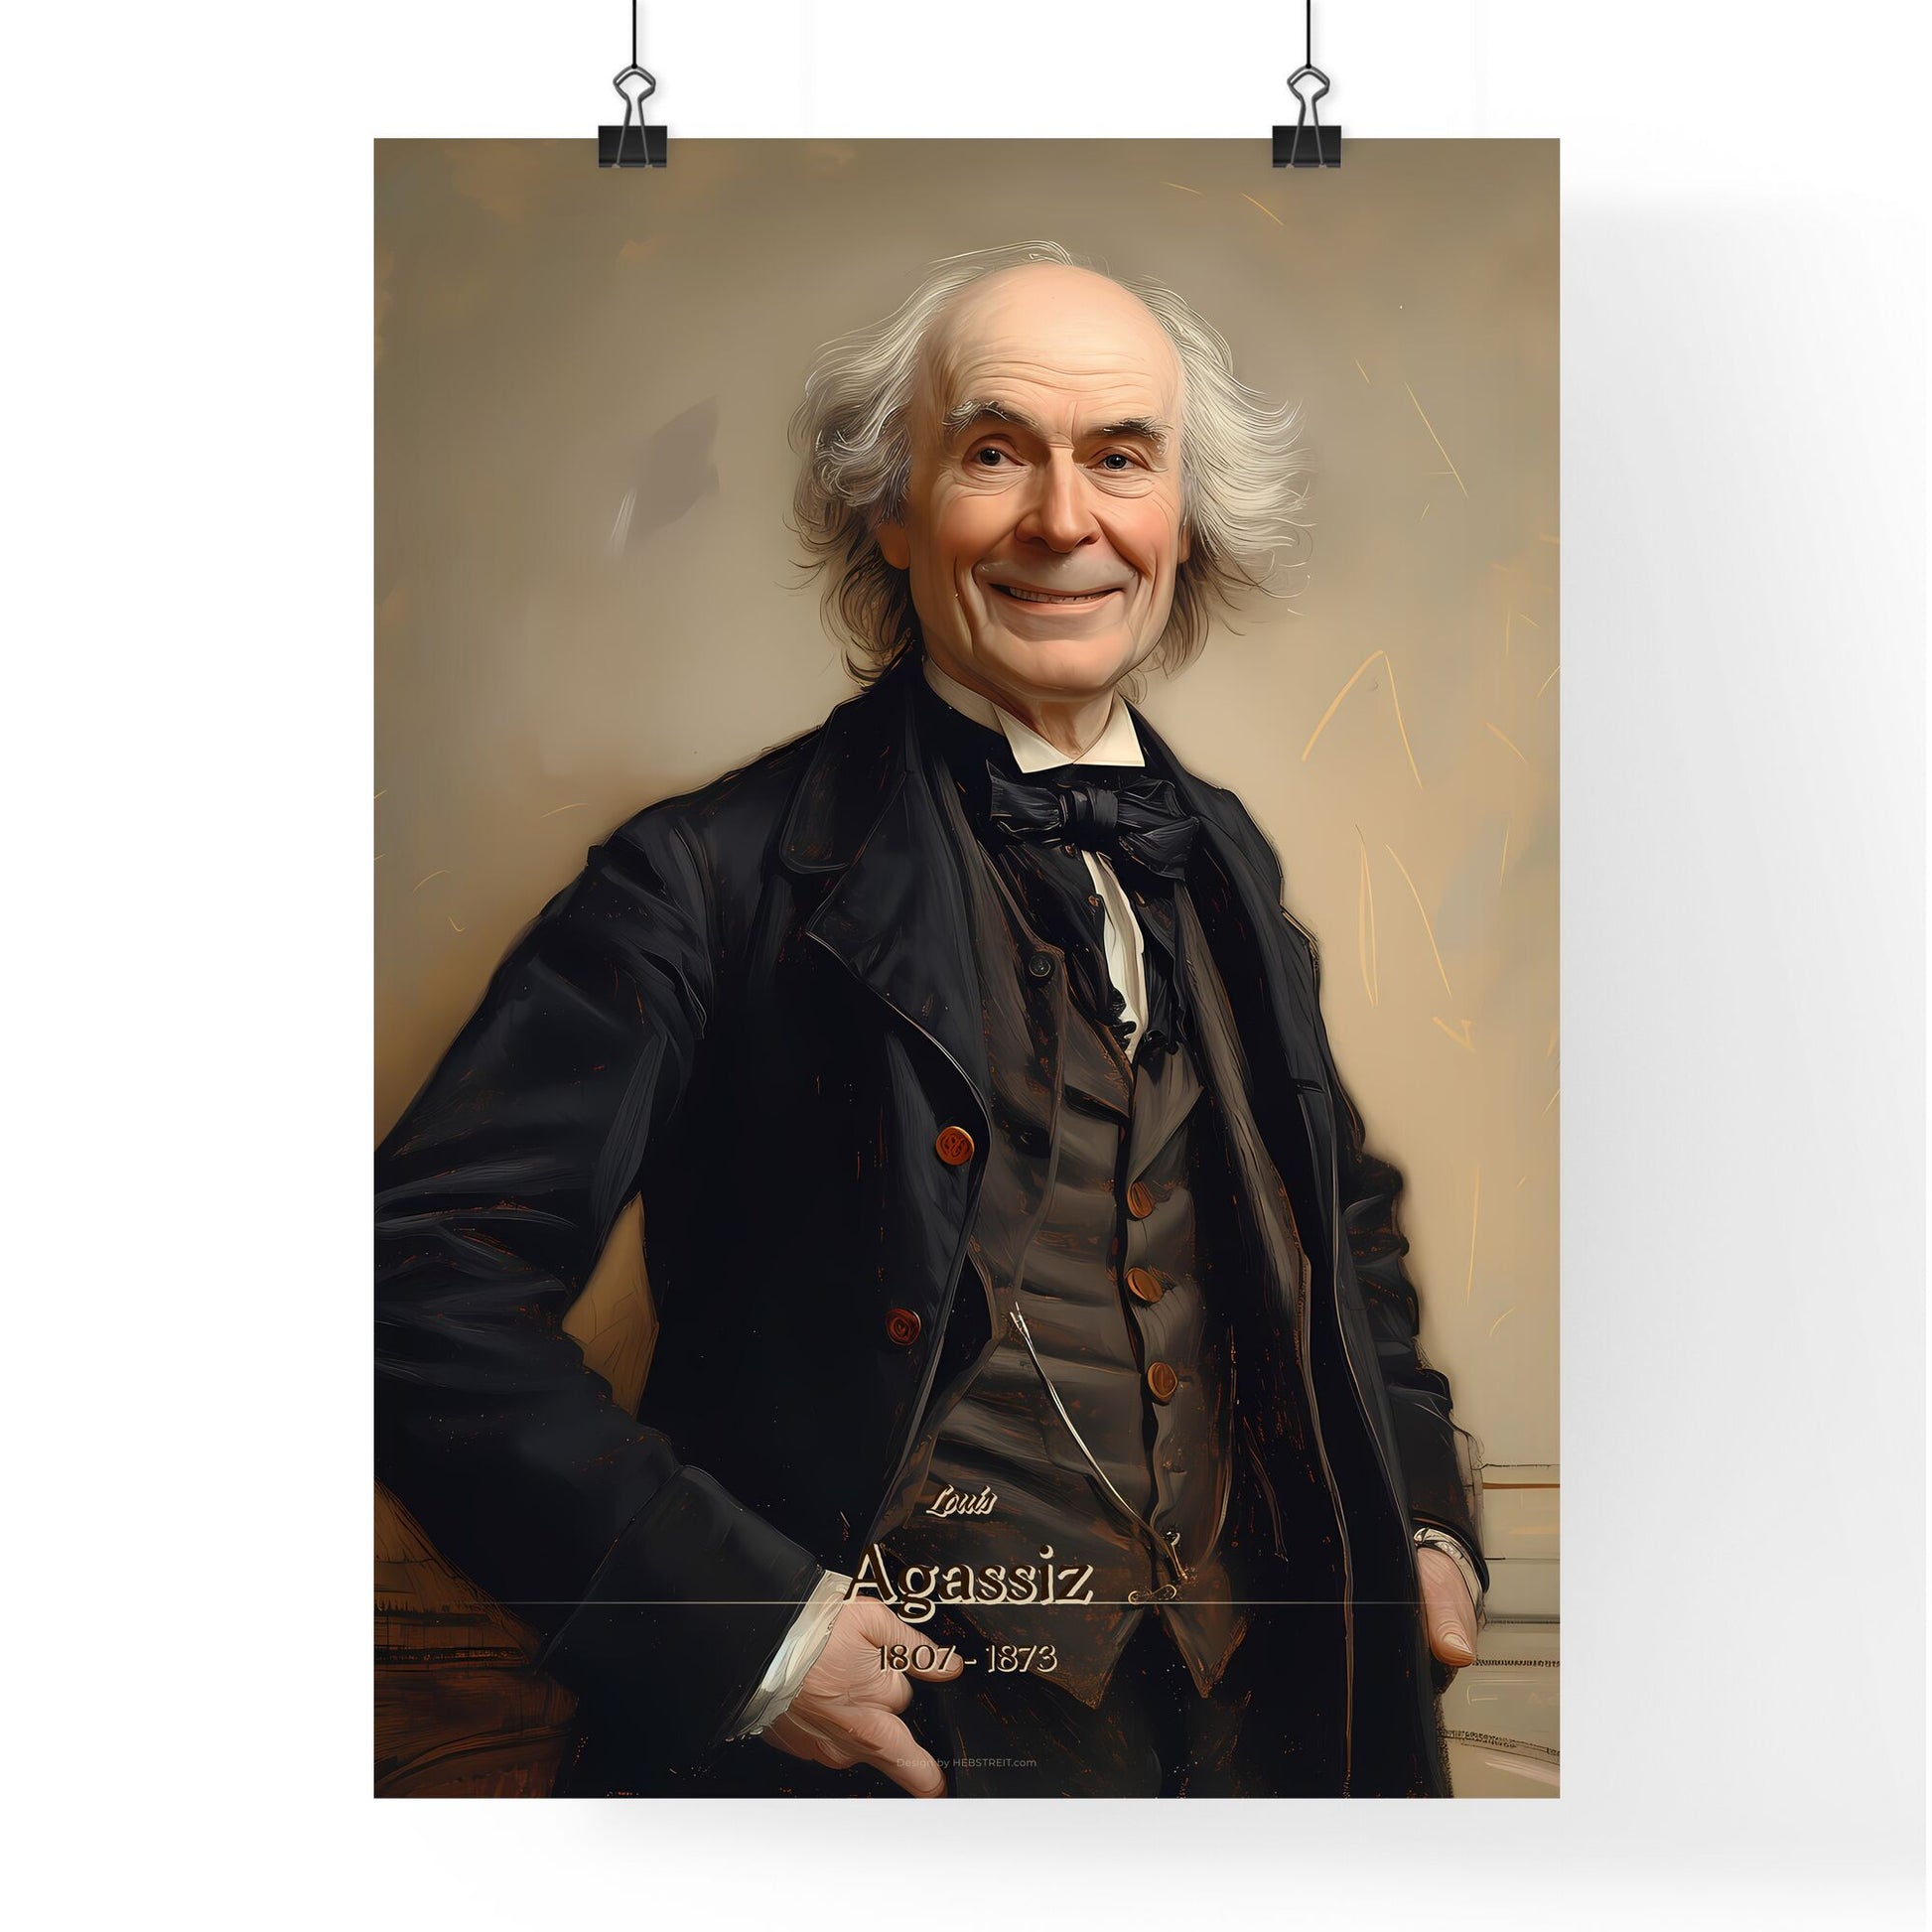 Louis, Agassiz, 1807 - 1873, A Poster of a man in a suit Default Title